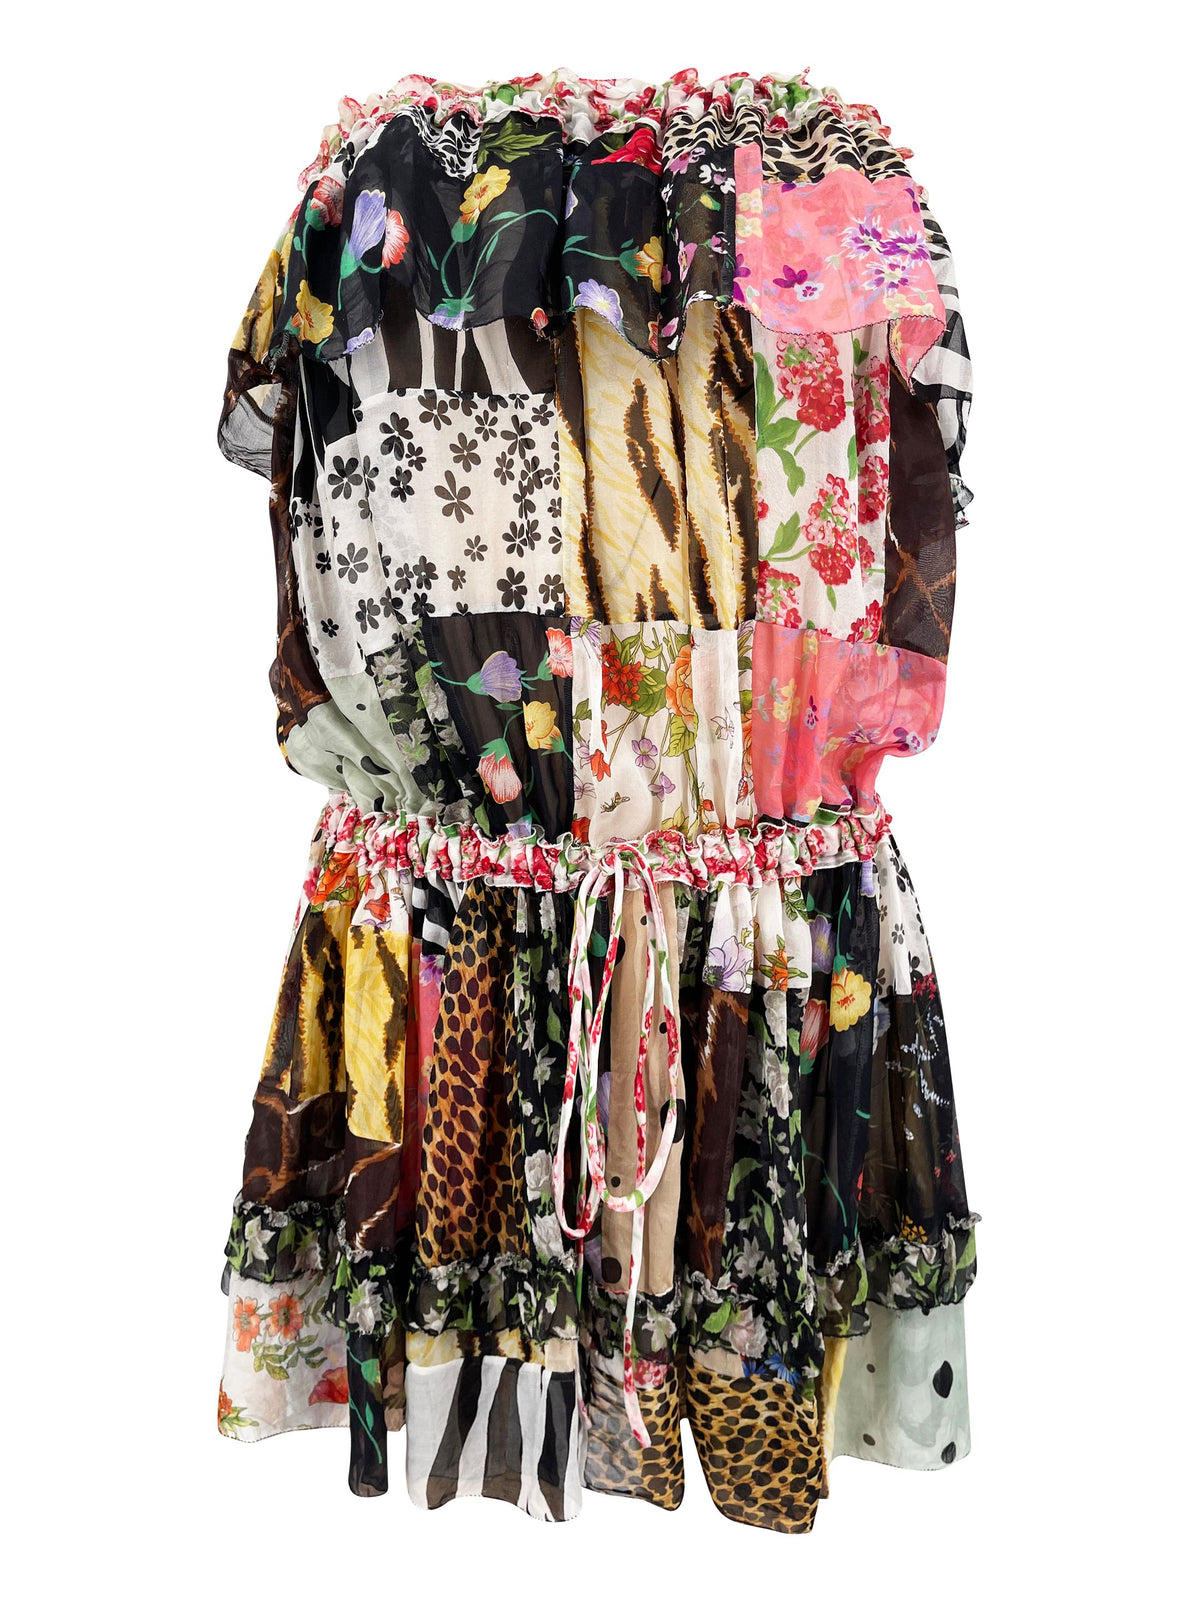 S/S 2008 Dolce & Gabbana Patchwork Silk Tube Dress - ONFEMME By Lindsey's Kloset